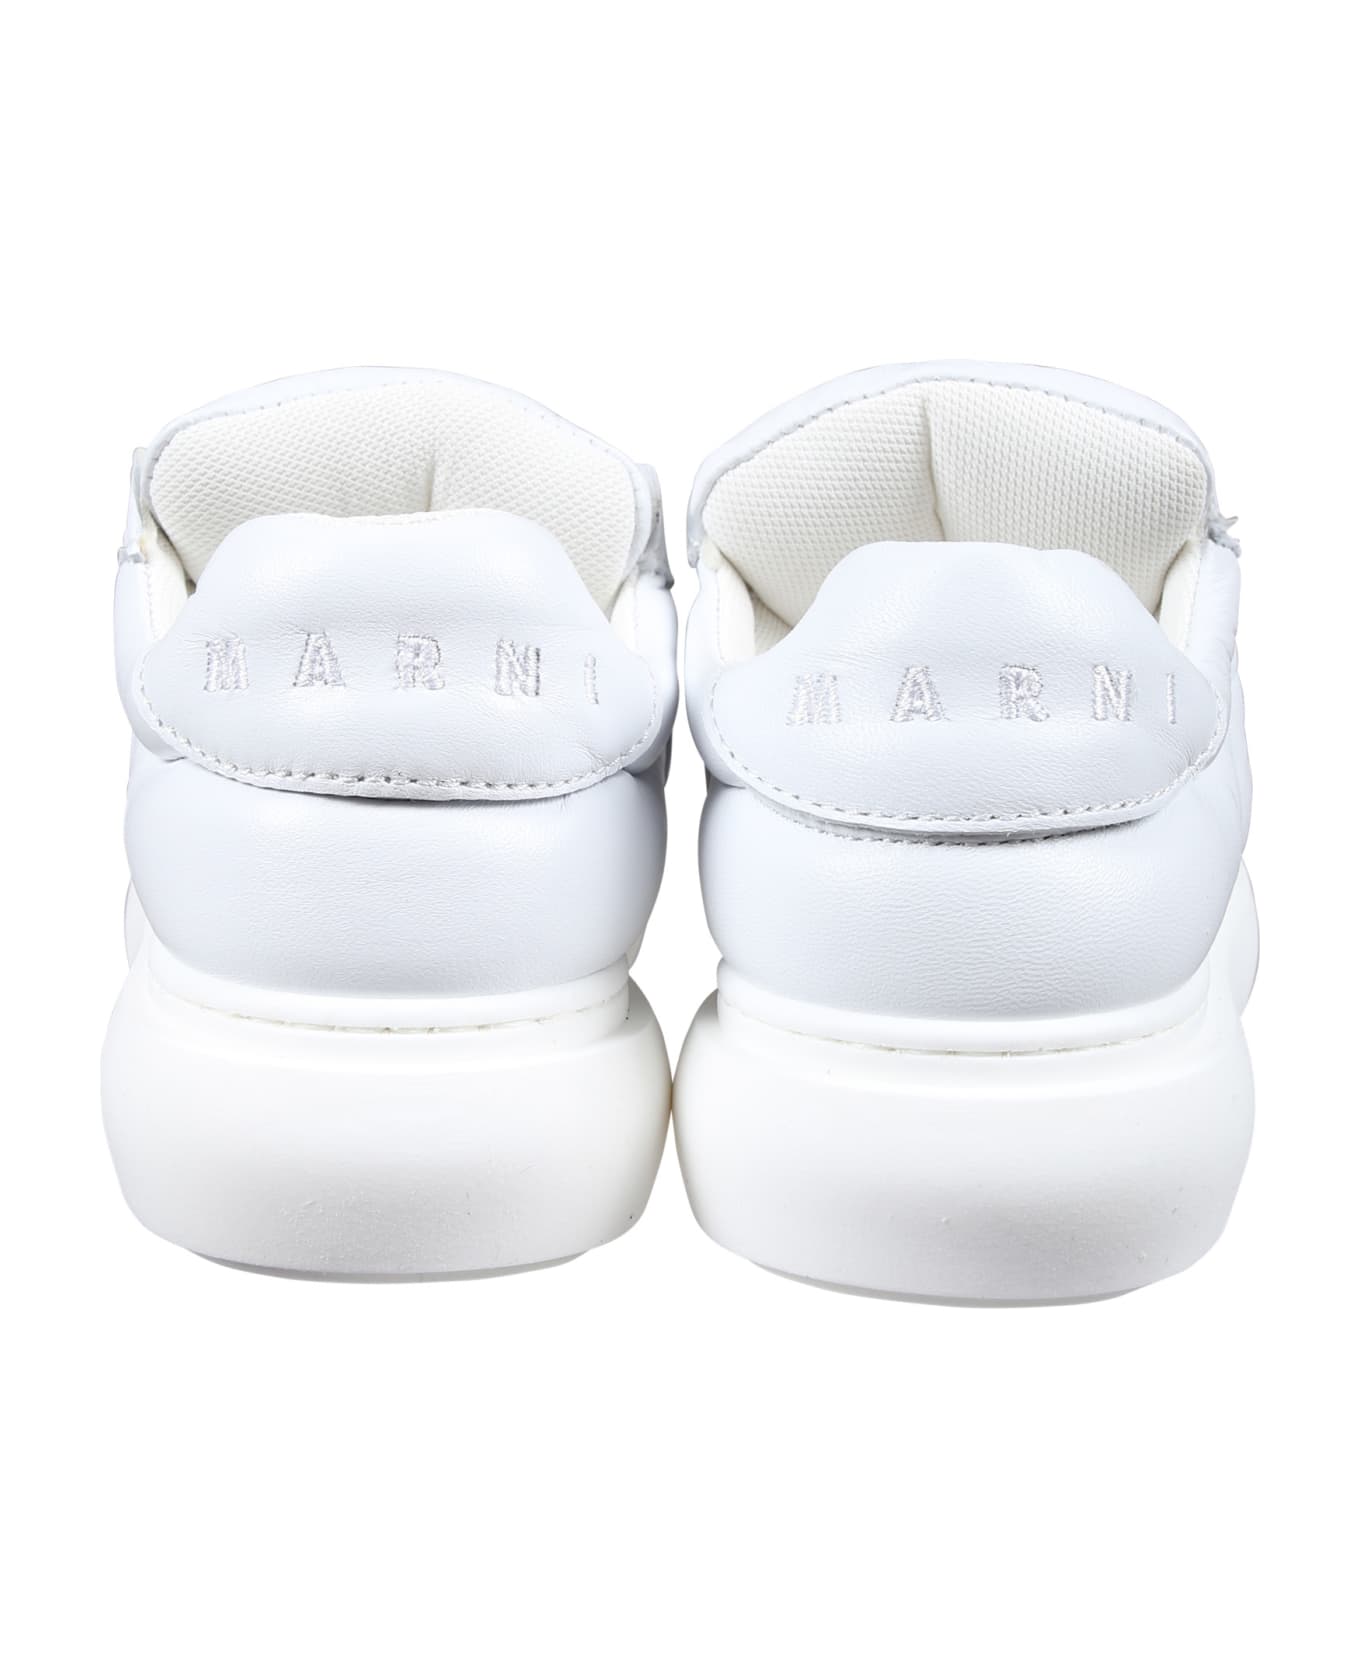 Marni White Sneakers For Girl With Logo - White シューズ